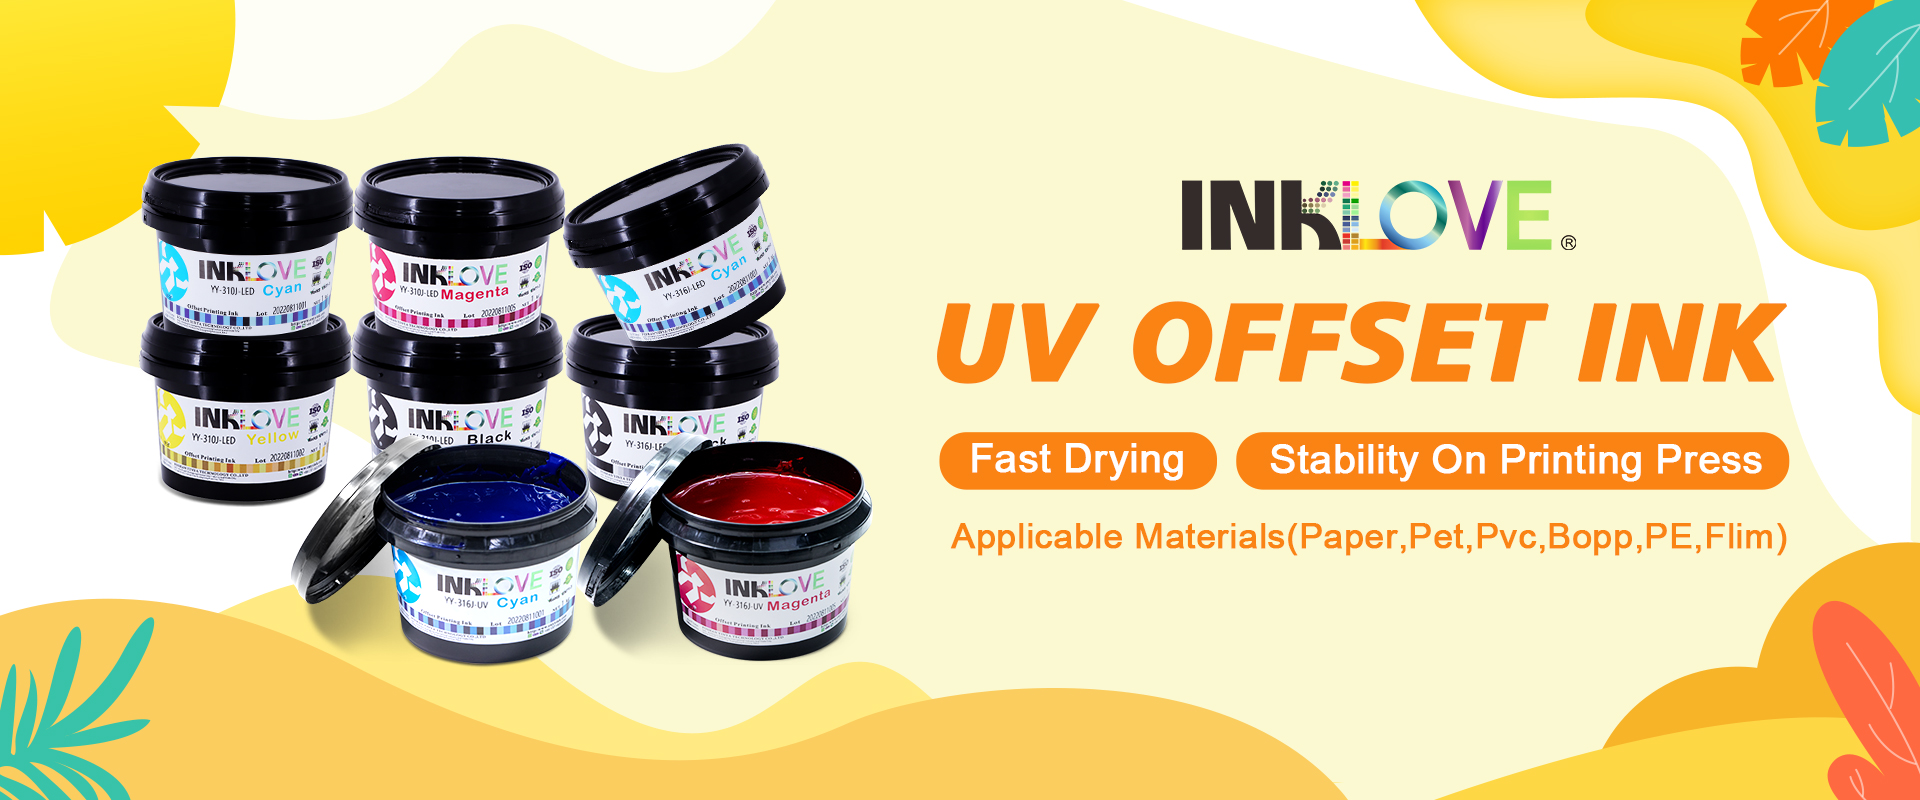 Inklove UV Offset Ink